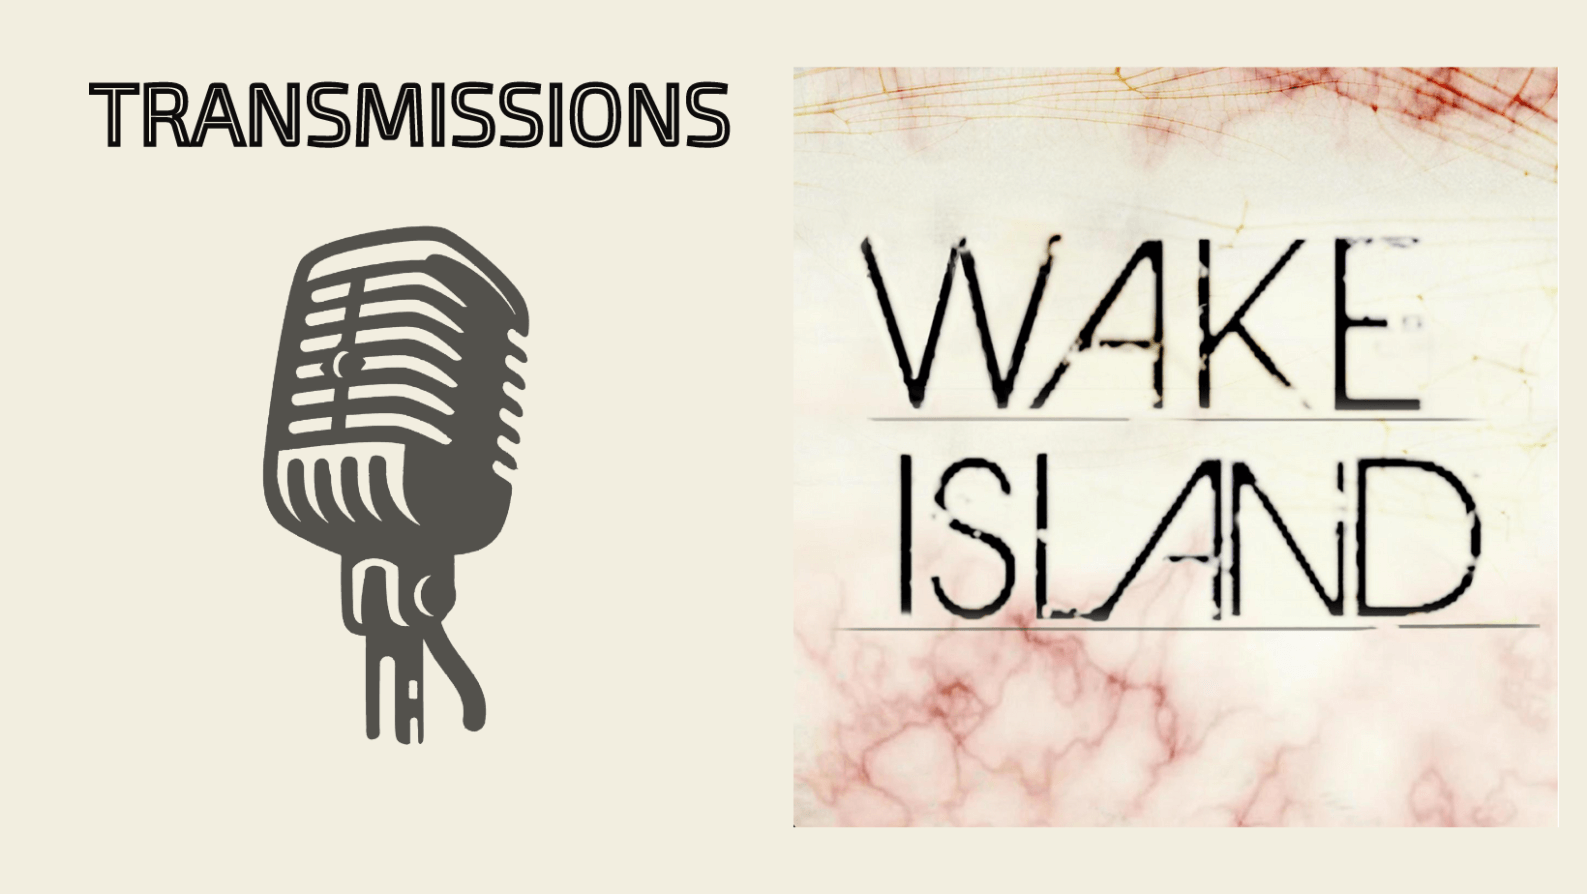 Transmissions: Wake Island